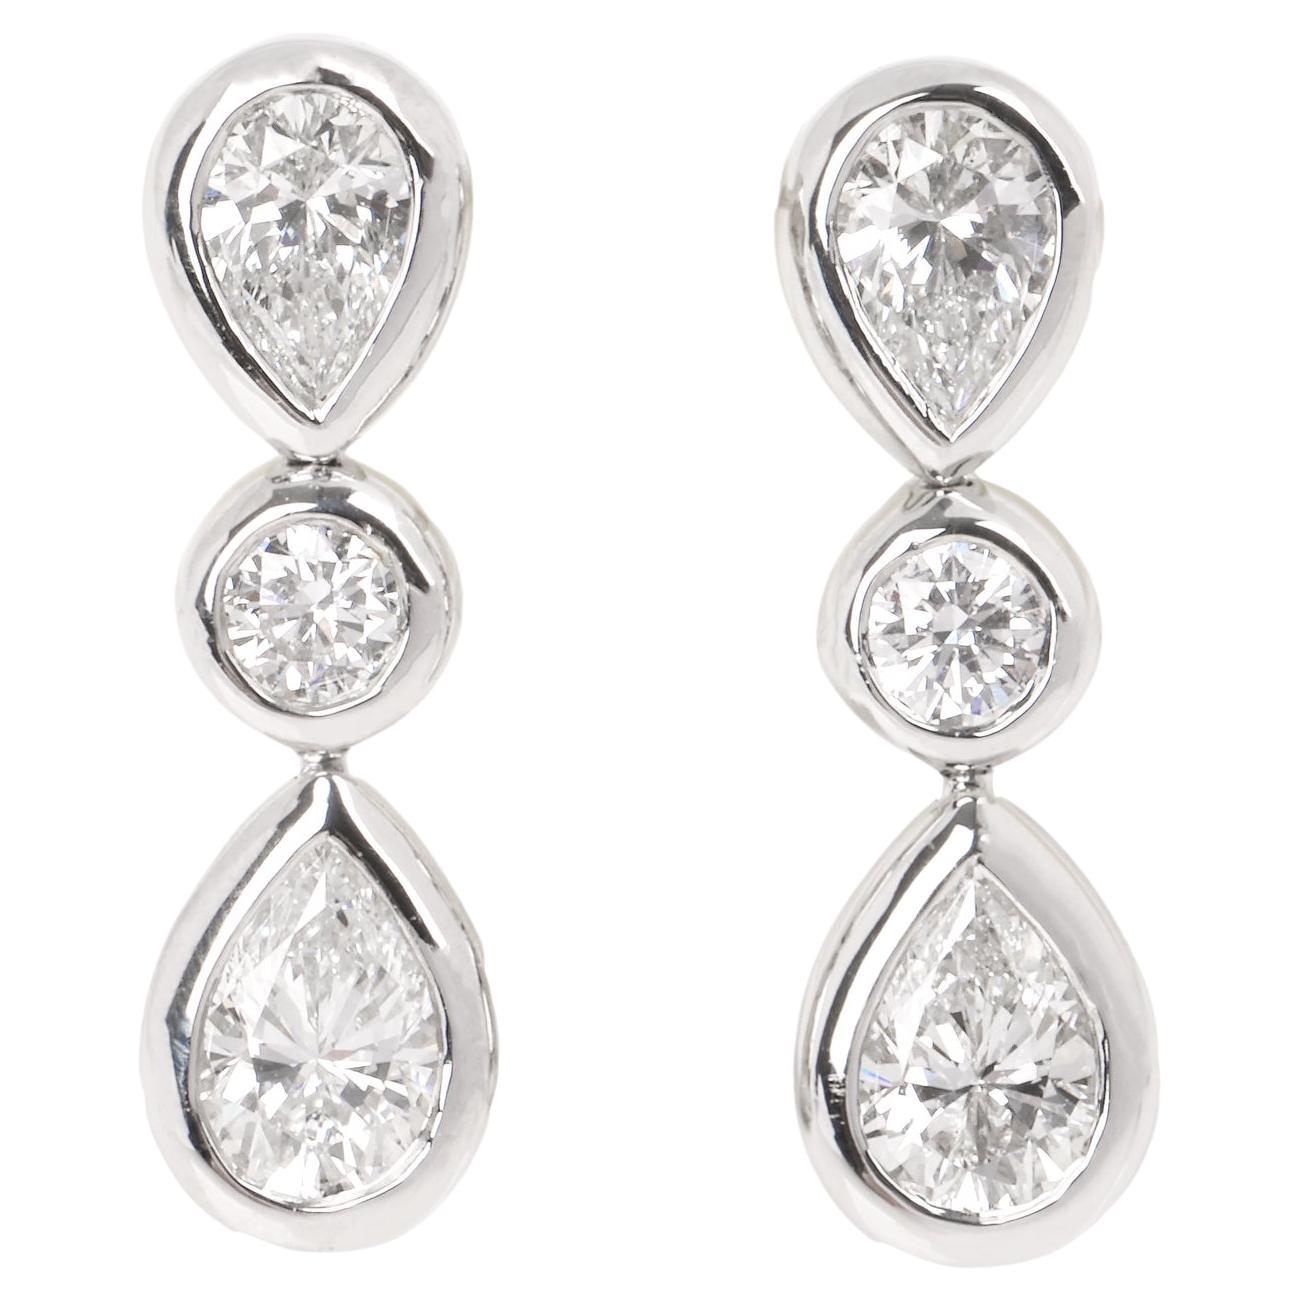 Sold at Auction: Louis Vuitton 18K Gold & Diamond Drop Earrings